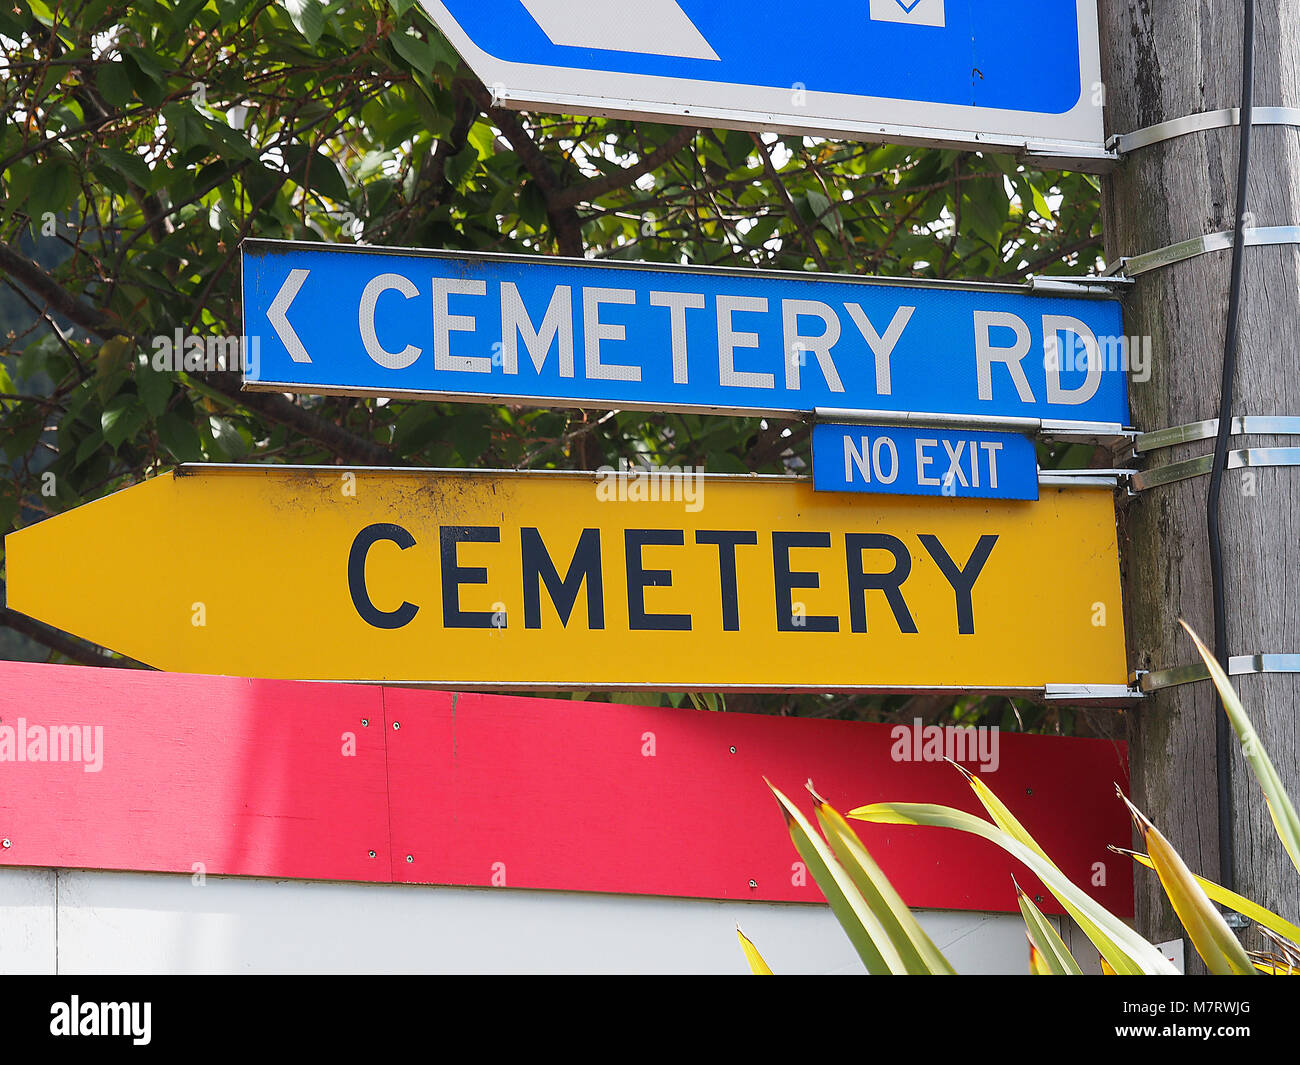 Humorous Cemetery Road Sign Stock Photo